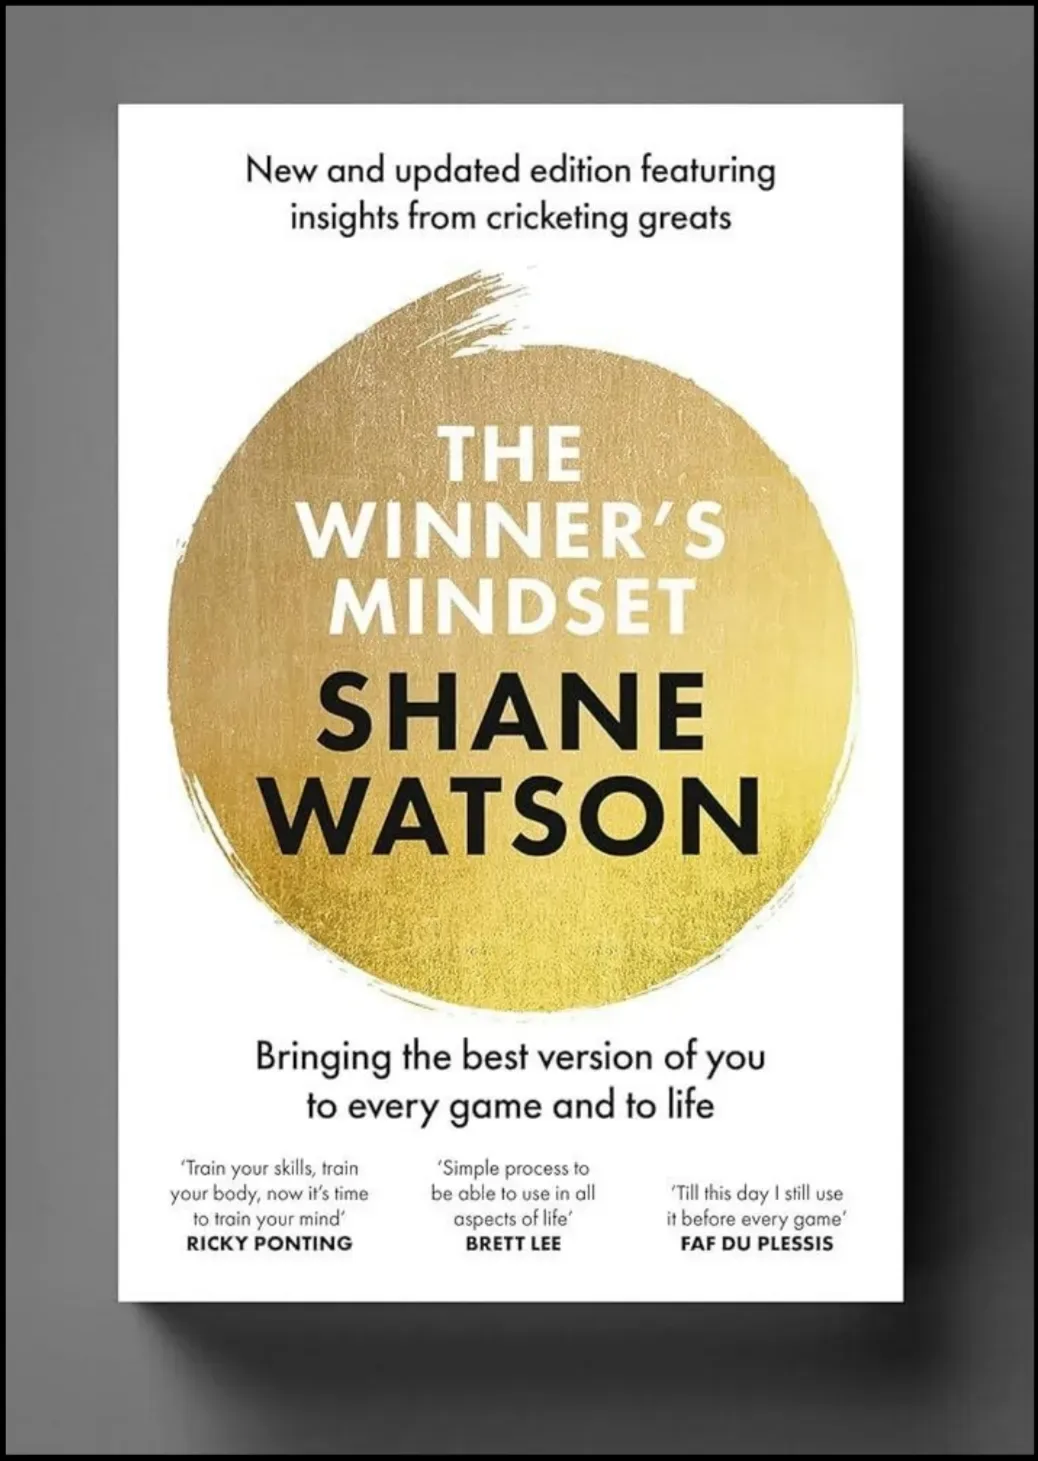 Australian cricketer Shane Watson's book 'The Winner's Mindset' released